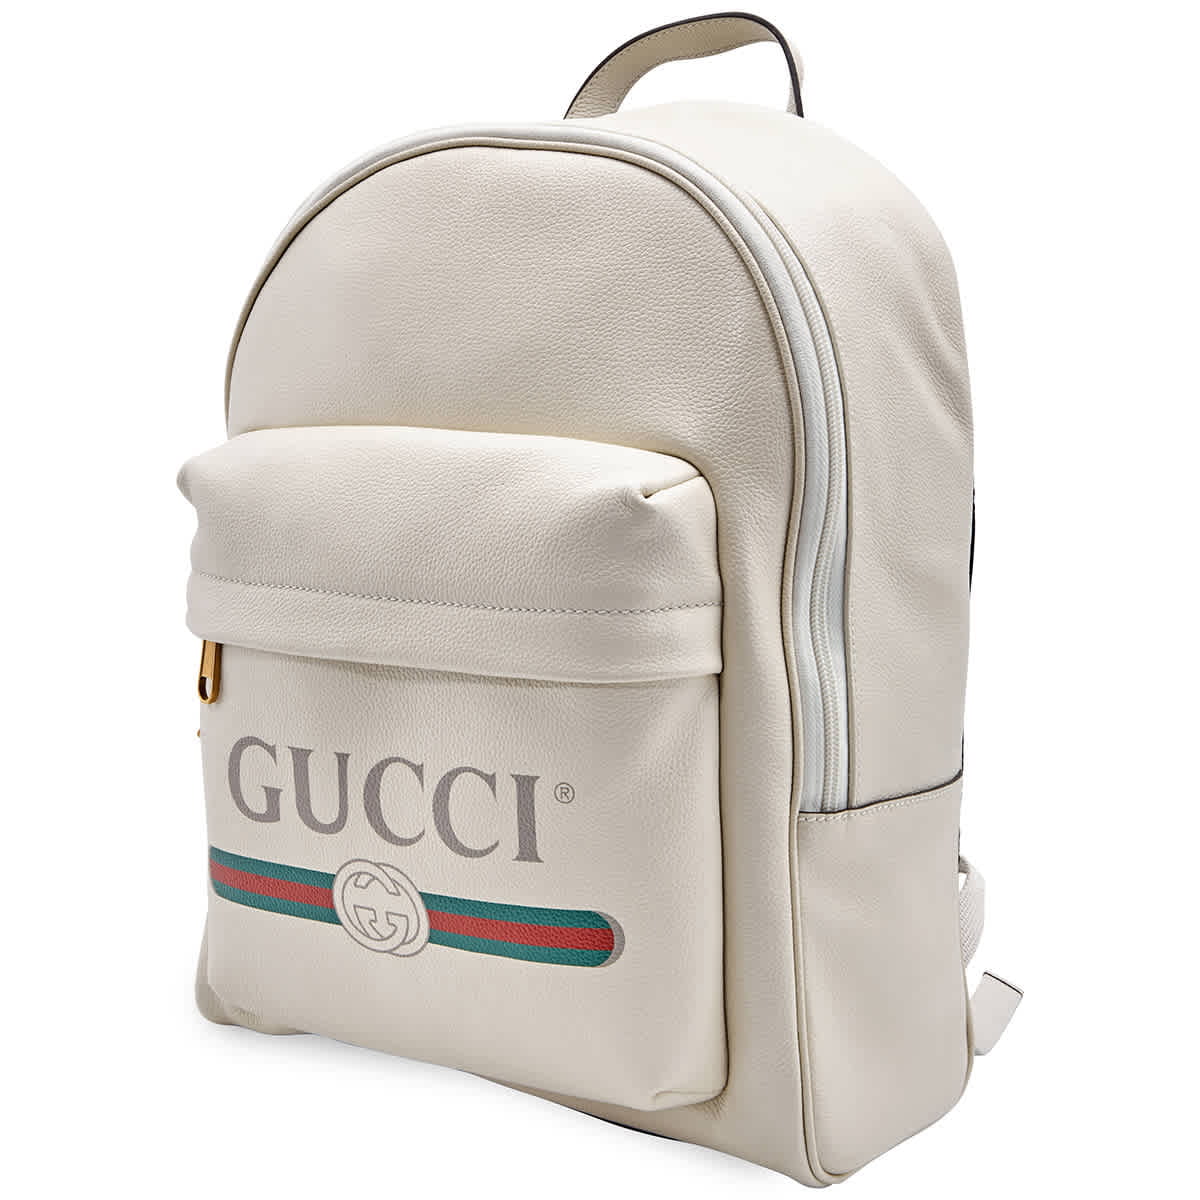 gucci back bag price